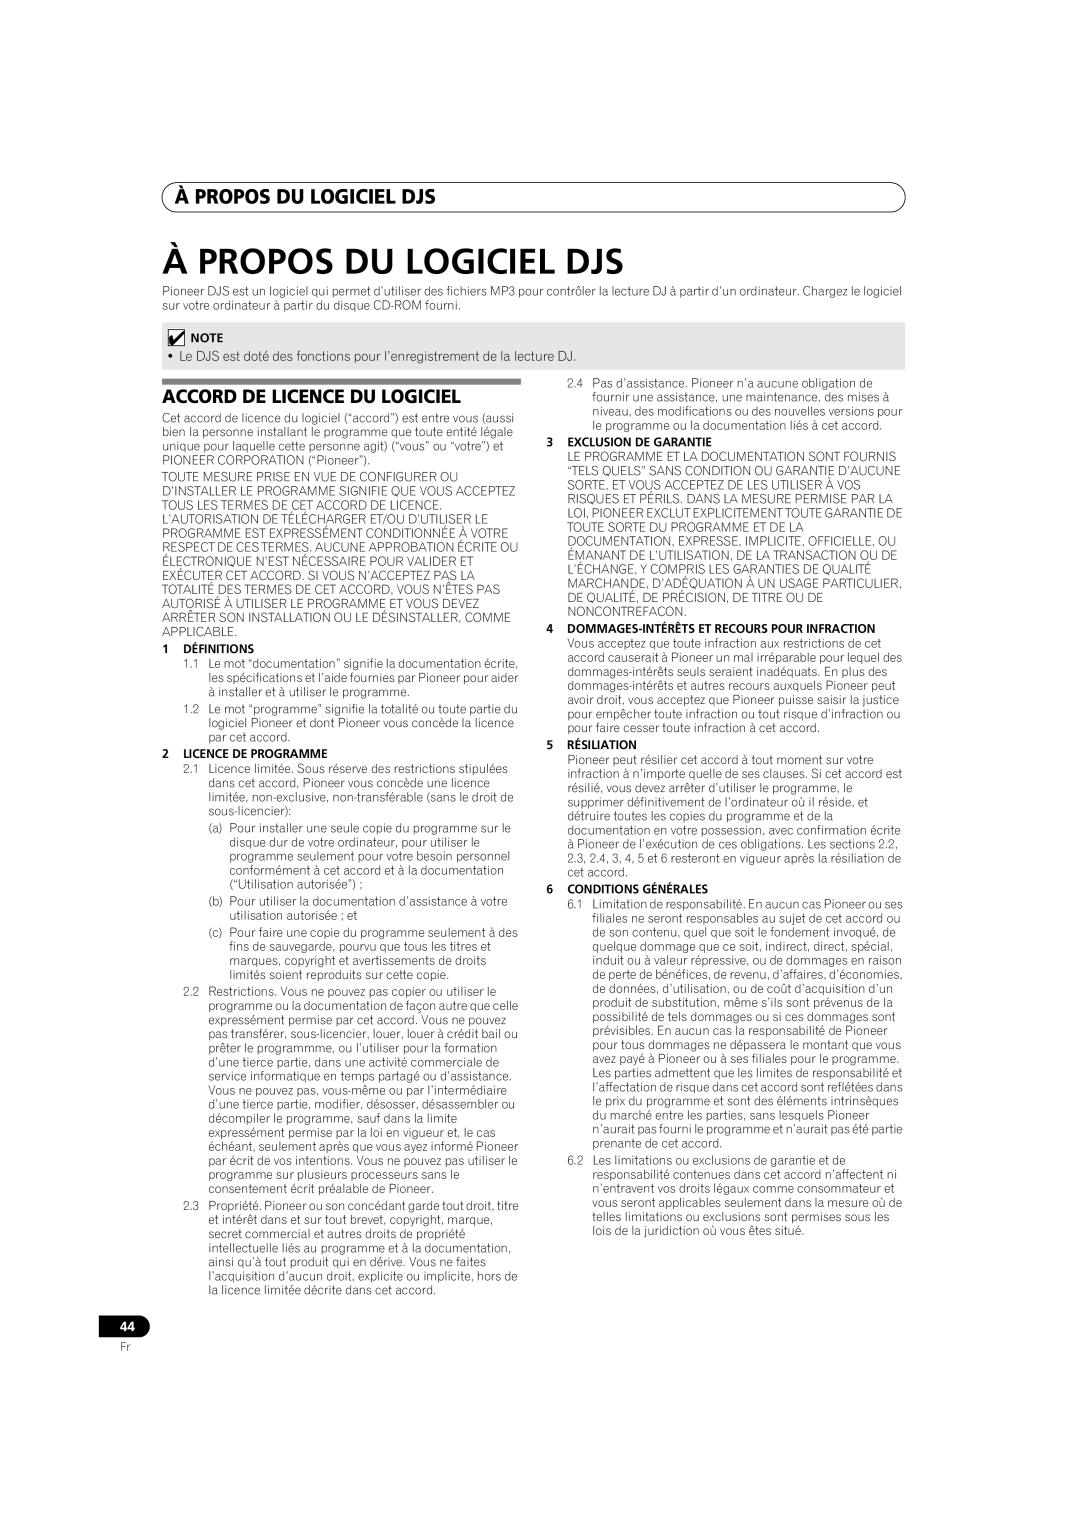 Pioneer MEP-7000 operating instructions Àpropos Du Logiciel Djs, Accord De Licence Du Logiciel 